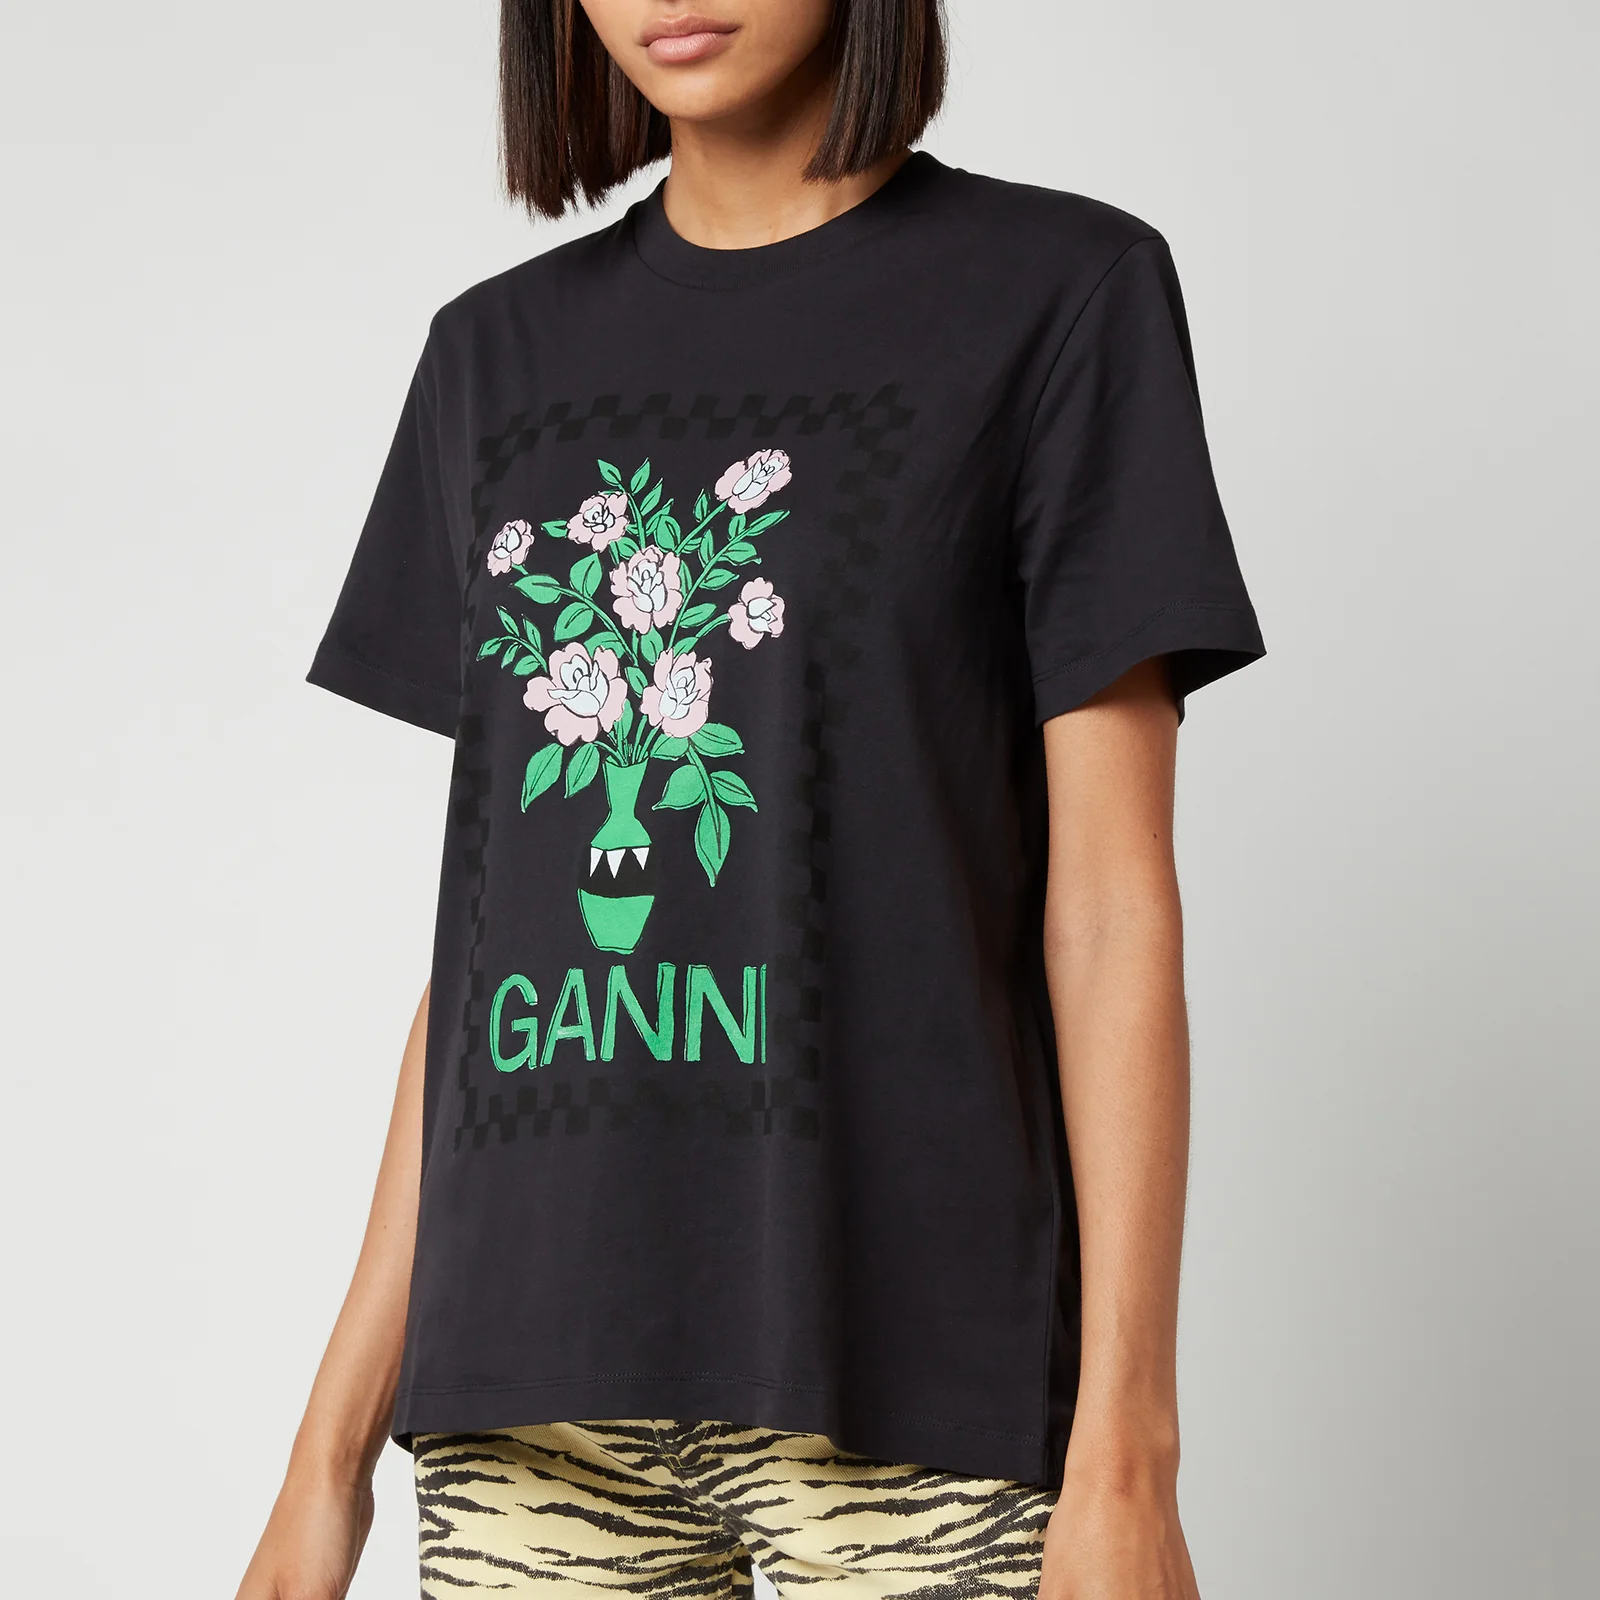 Ganni Women's Basic Cotton Jersey T-Shirt - Phantom Image 1